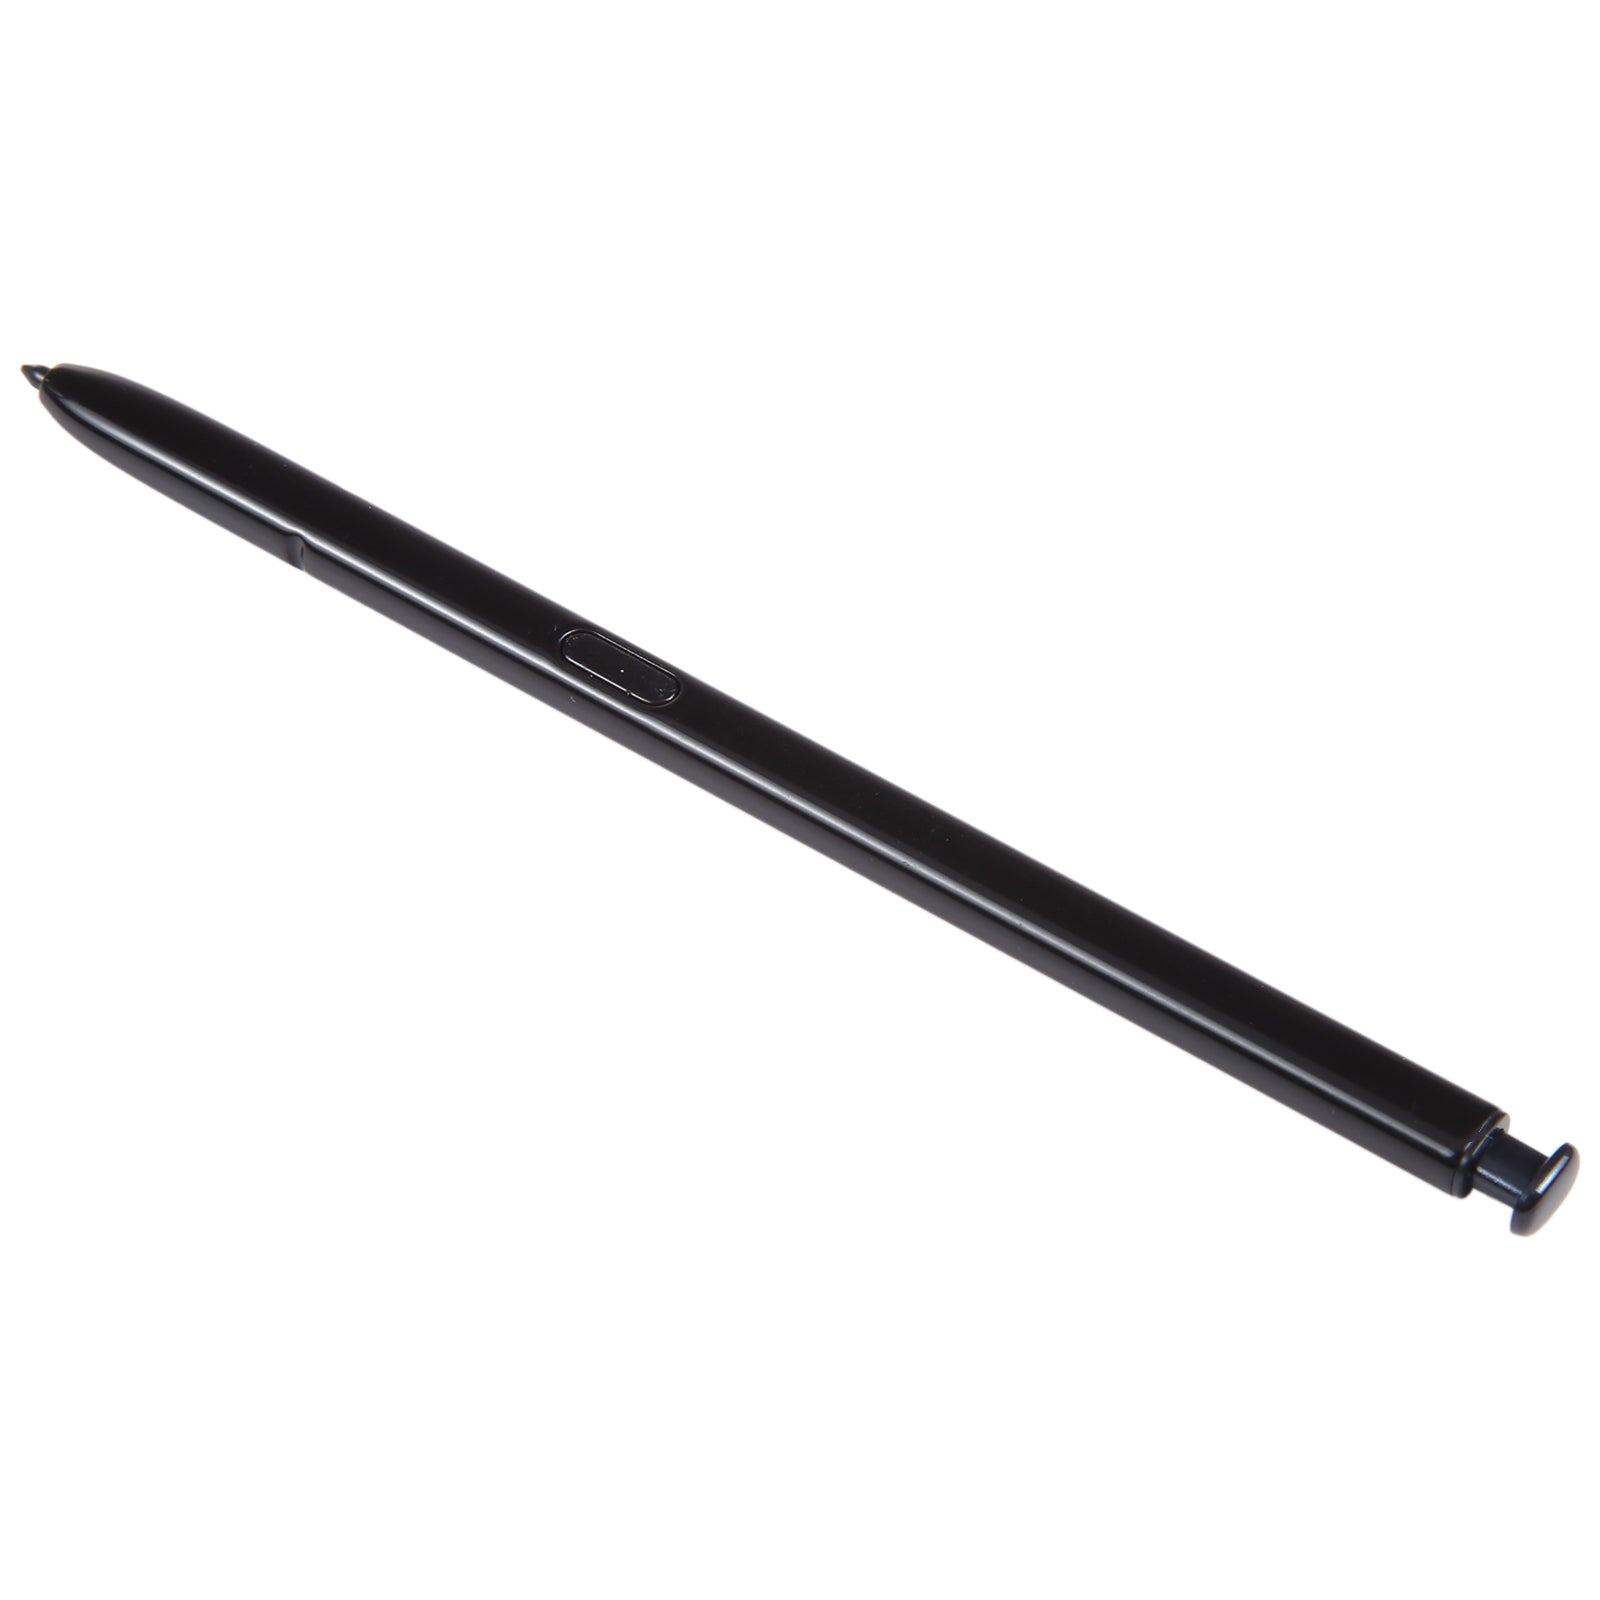 Stylus Pen Samsung Galaxy Note 10 970F Black